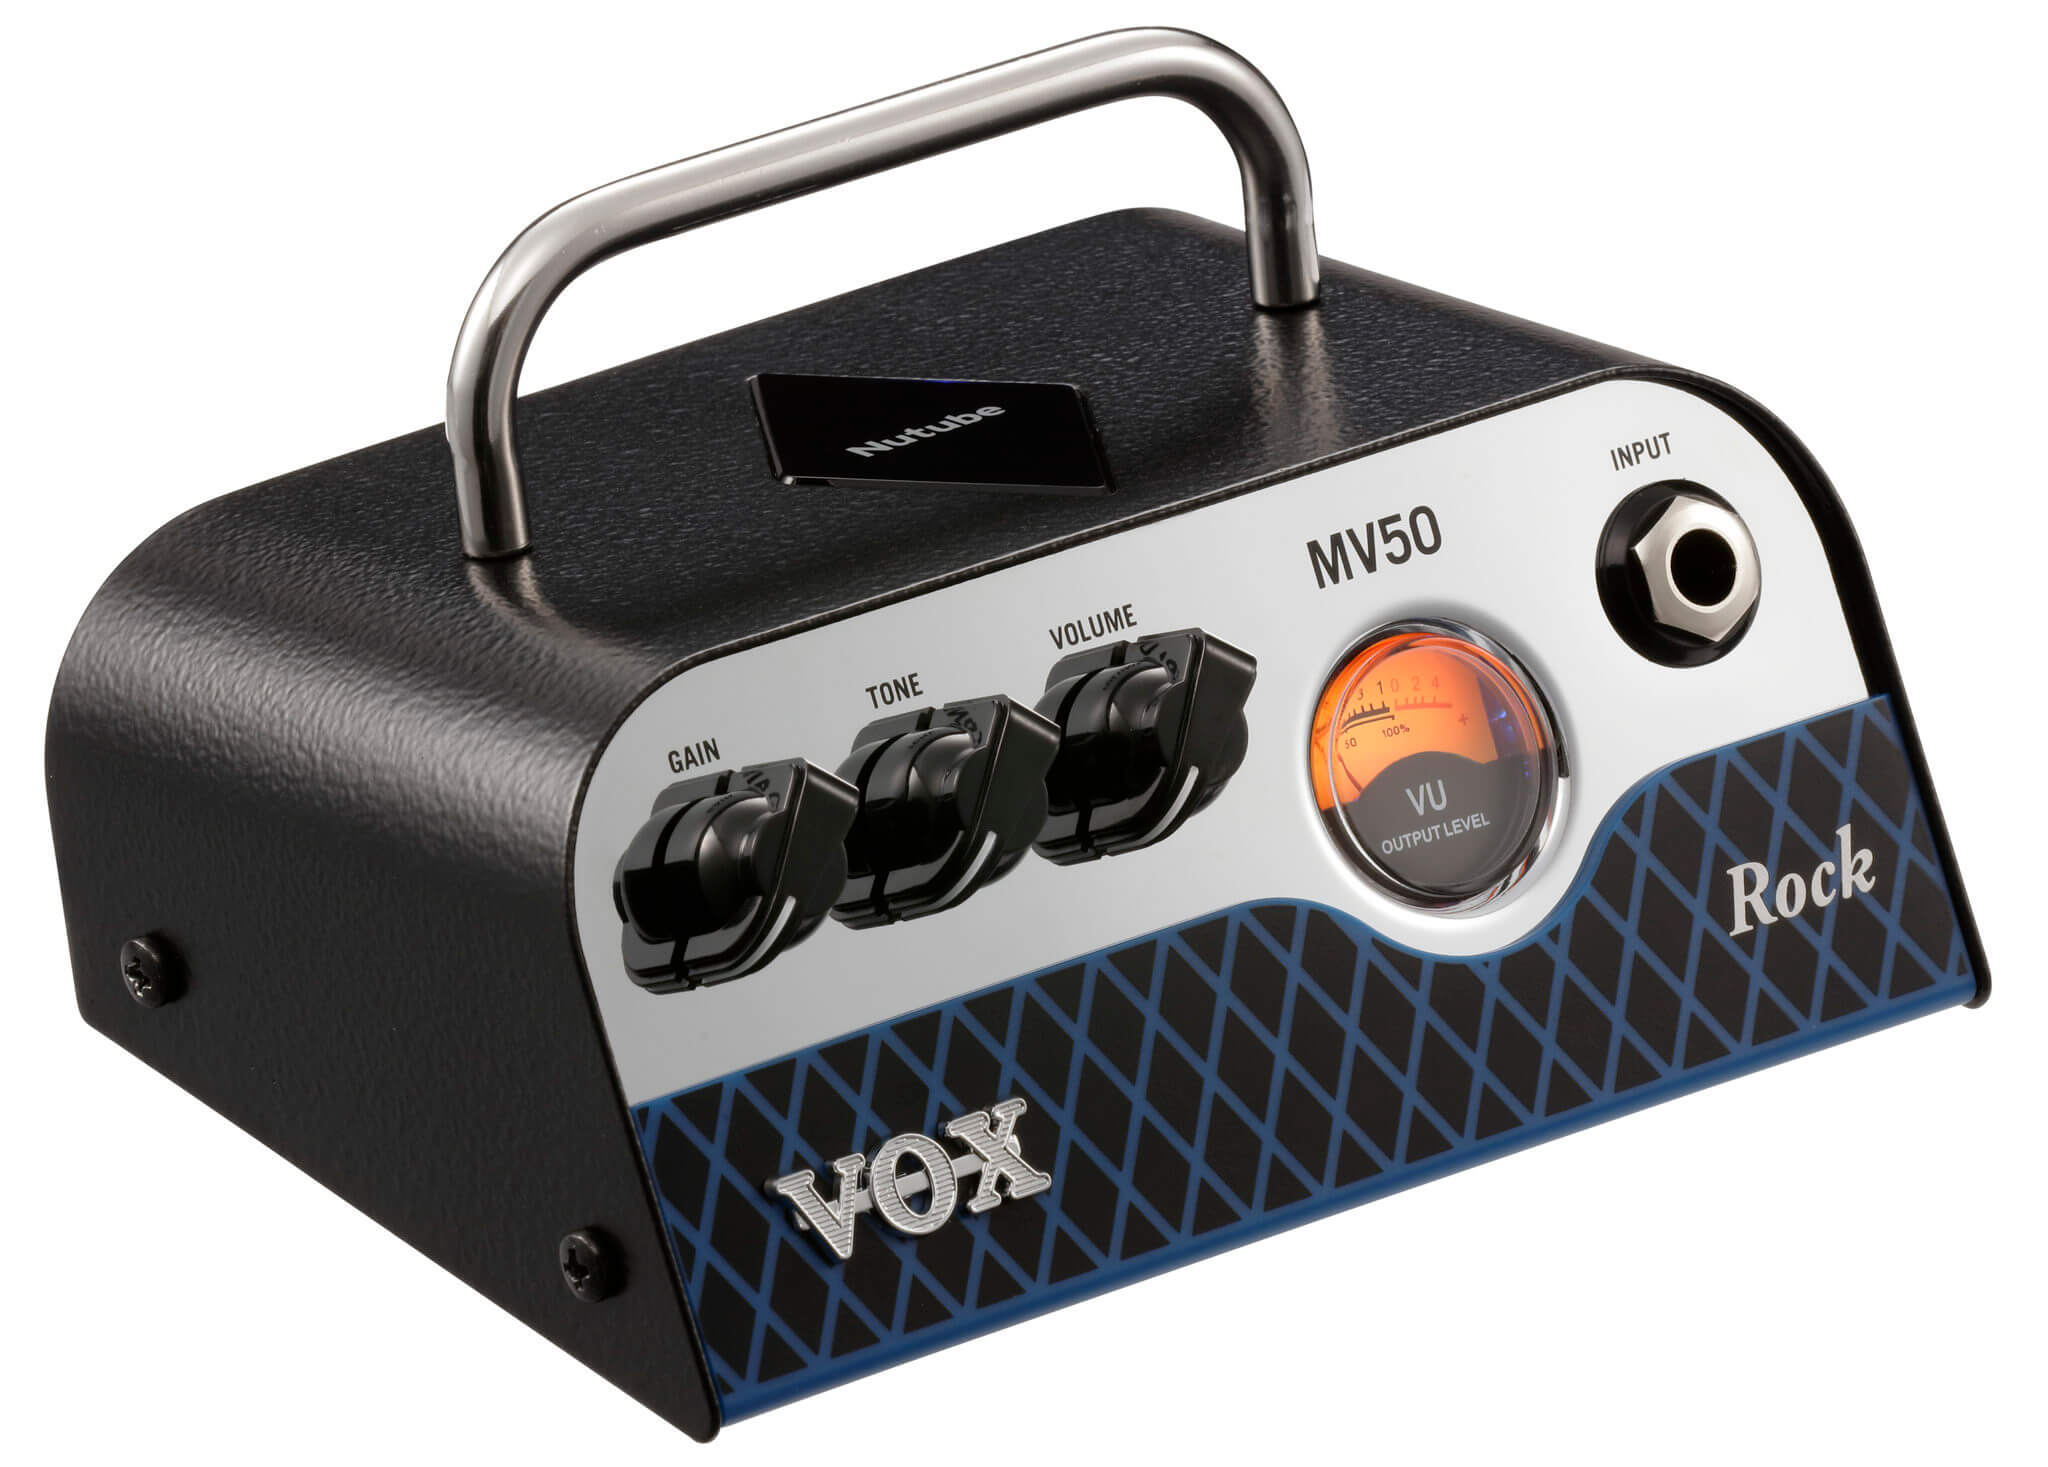 MV50 Rock - Vox Amps